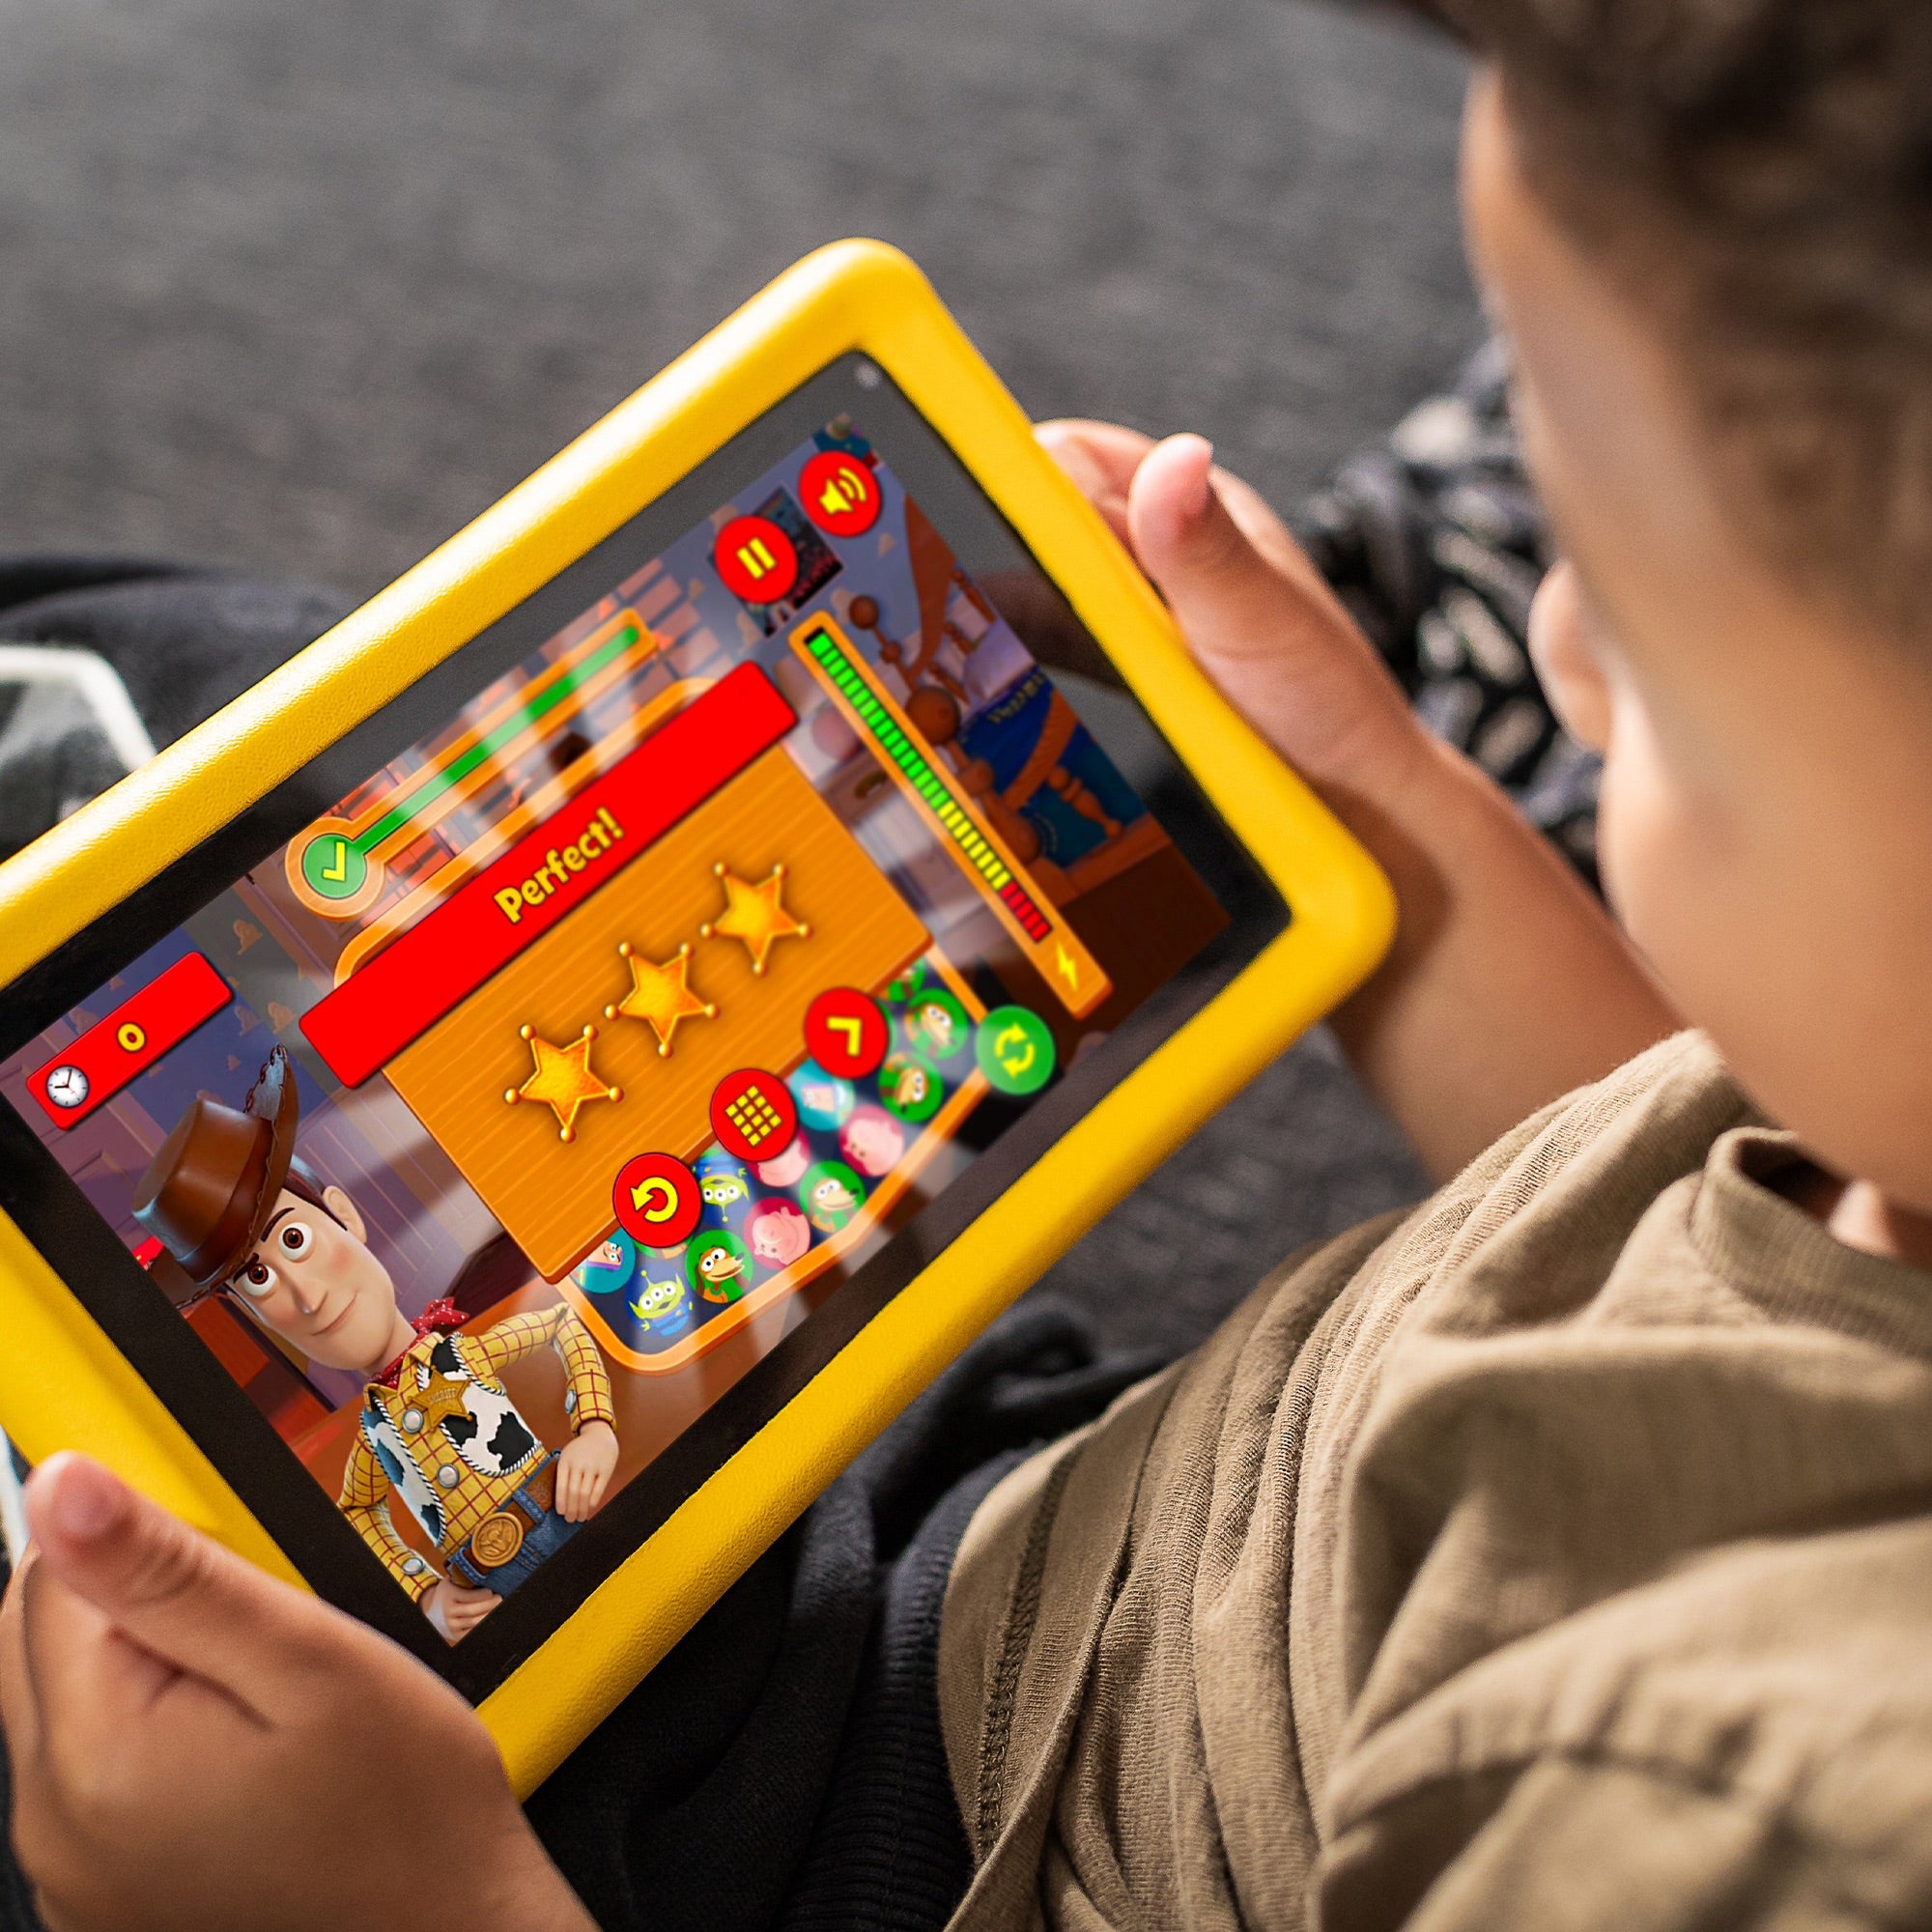 Pebble Gear 7” tablette enfant – Disney Toy Story 4 Tablette (Toy